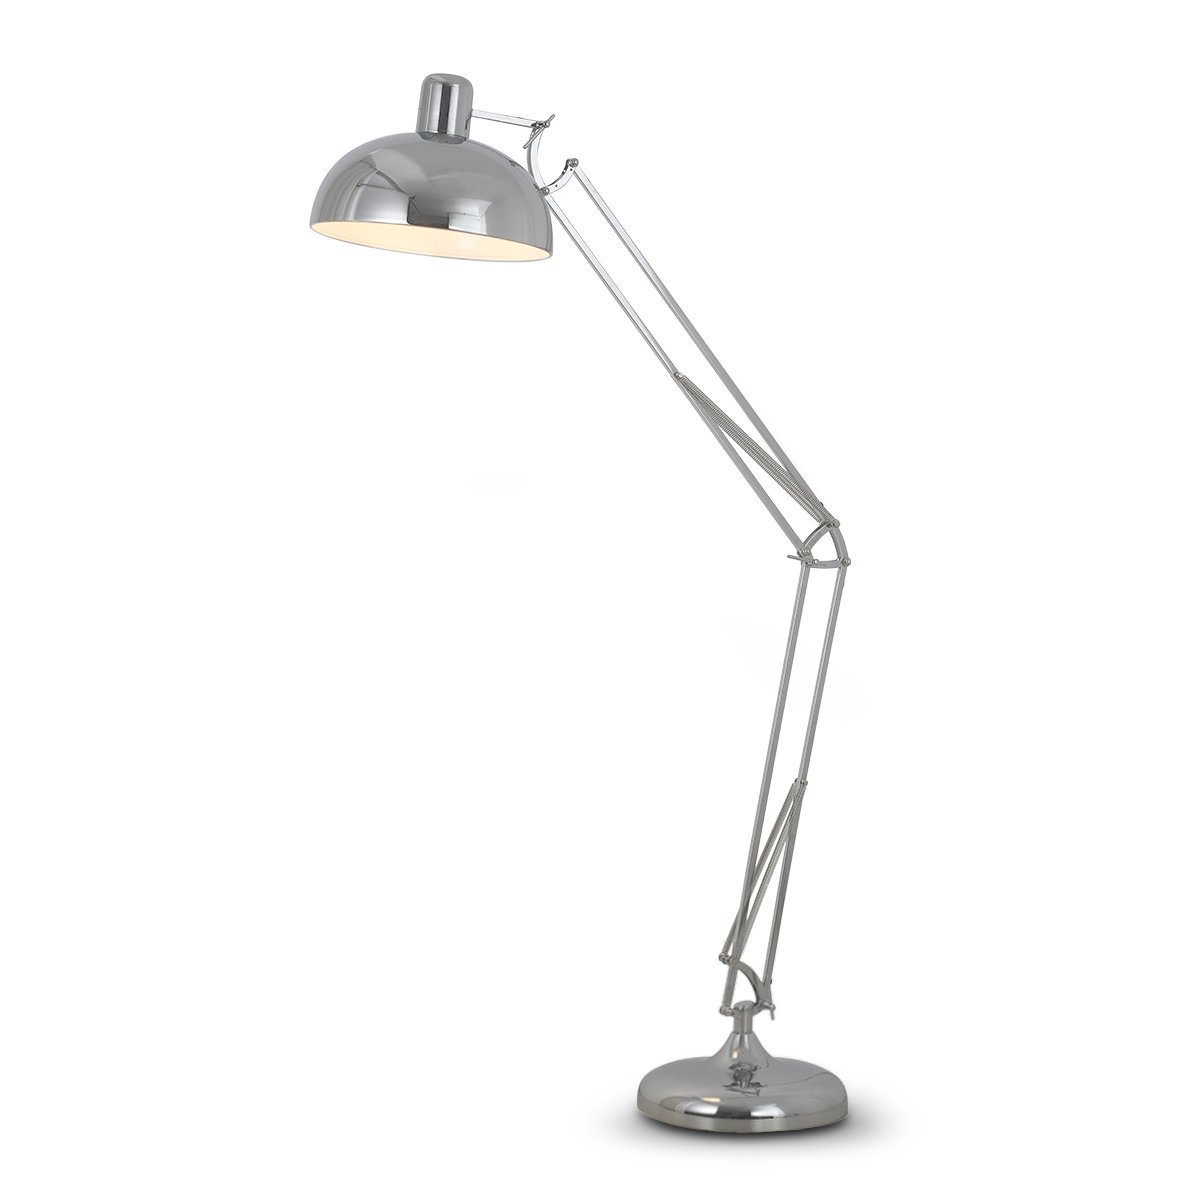 Sarantino Metal Architect Floor Lamp Shade Adjustable Height - Chrome 2